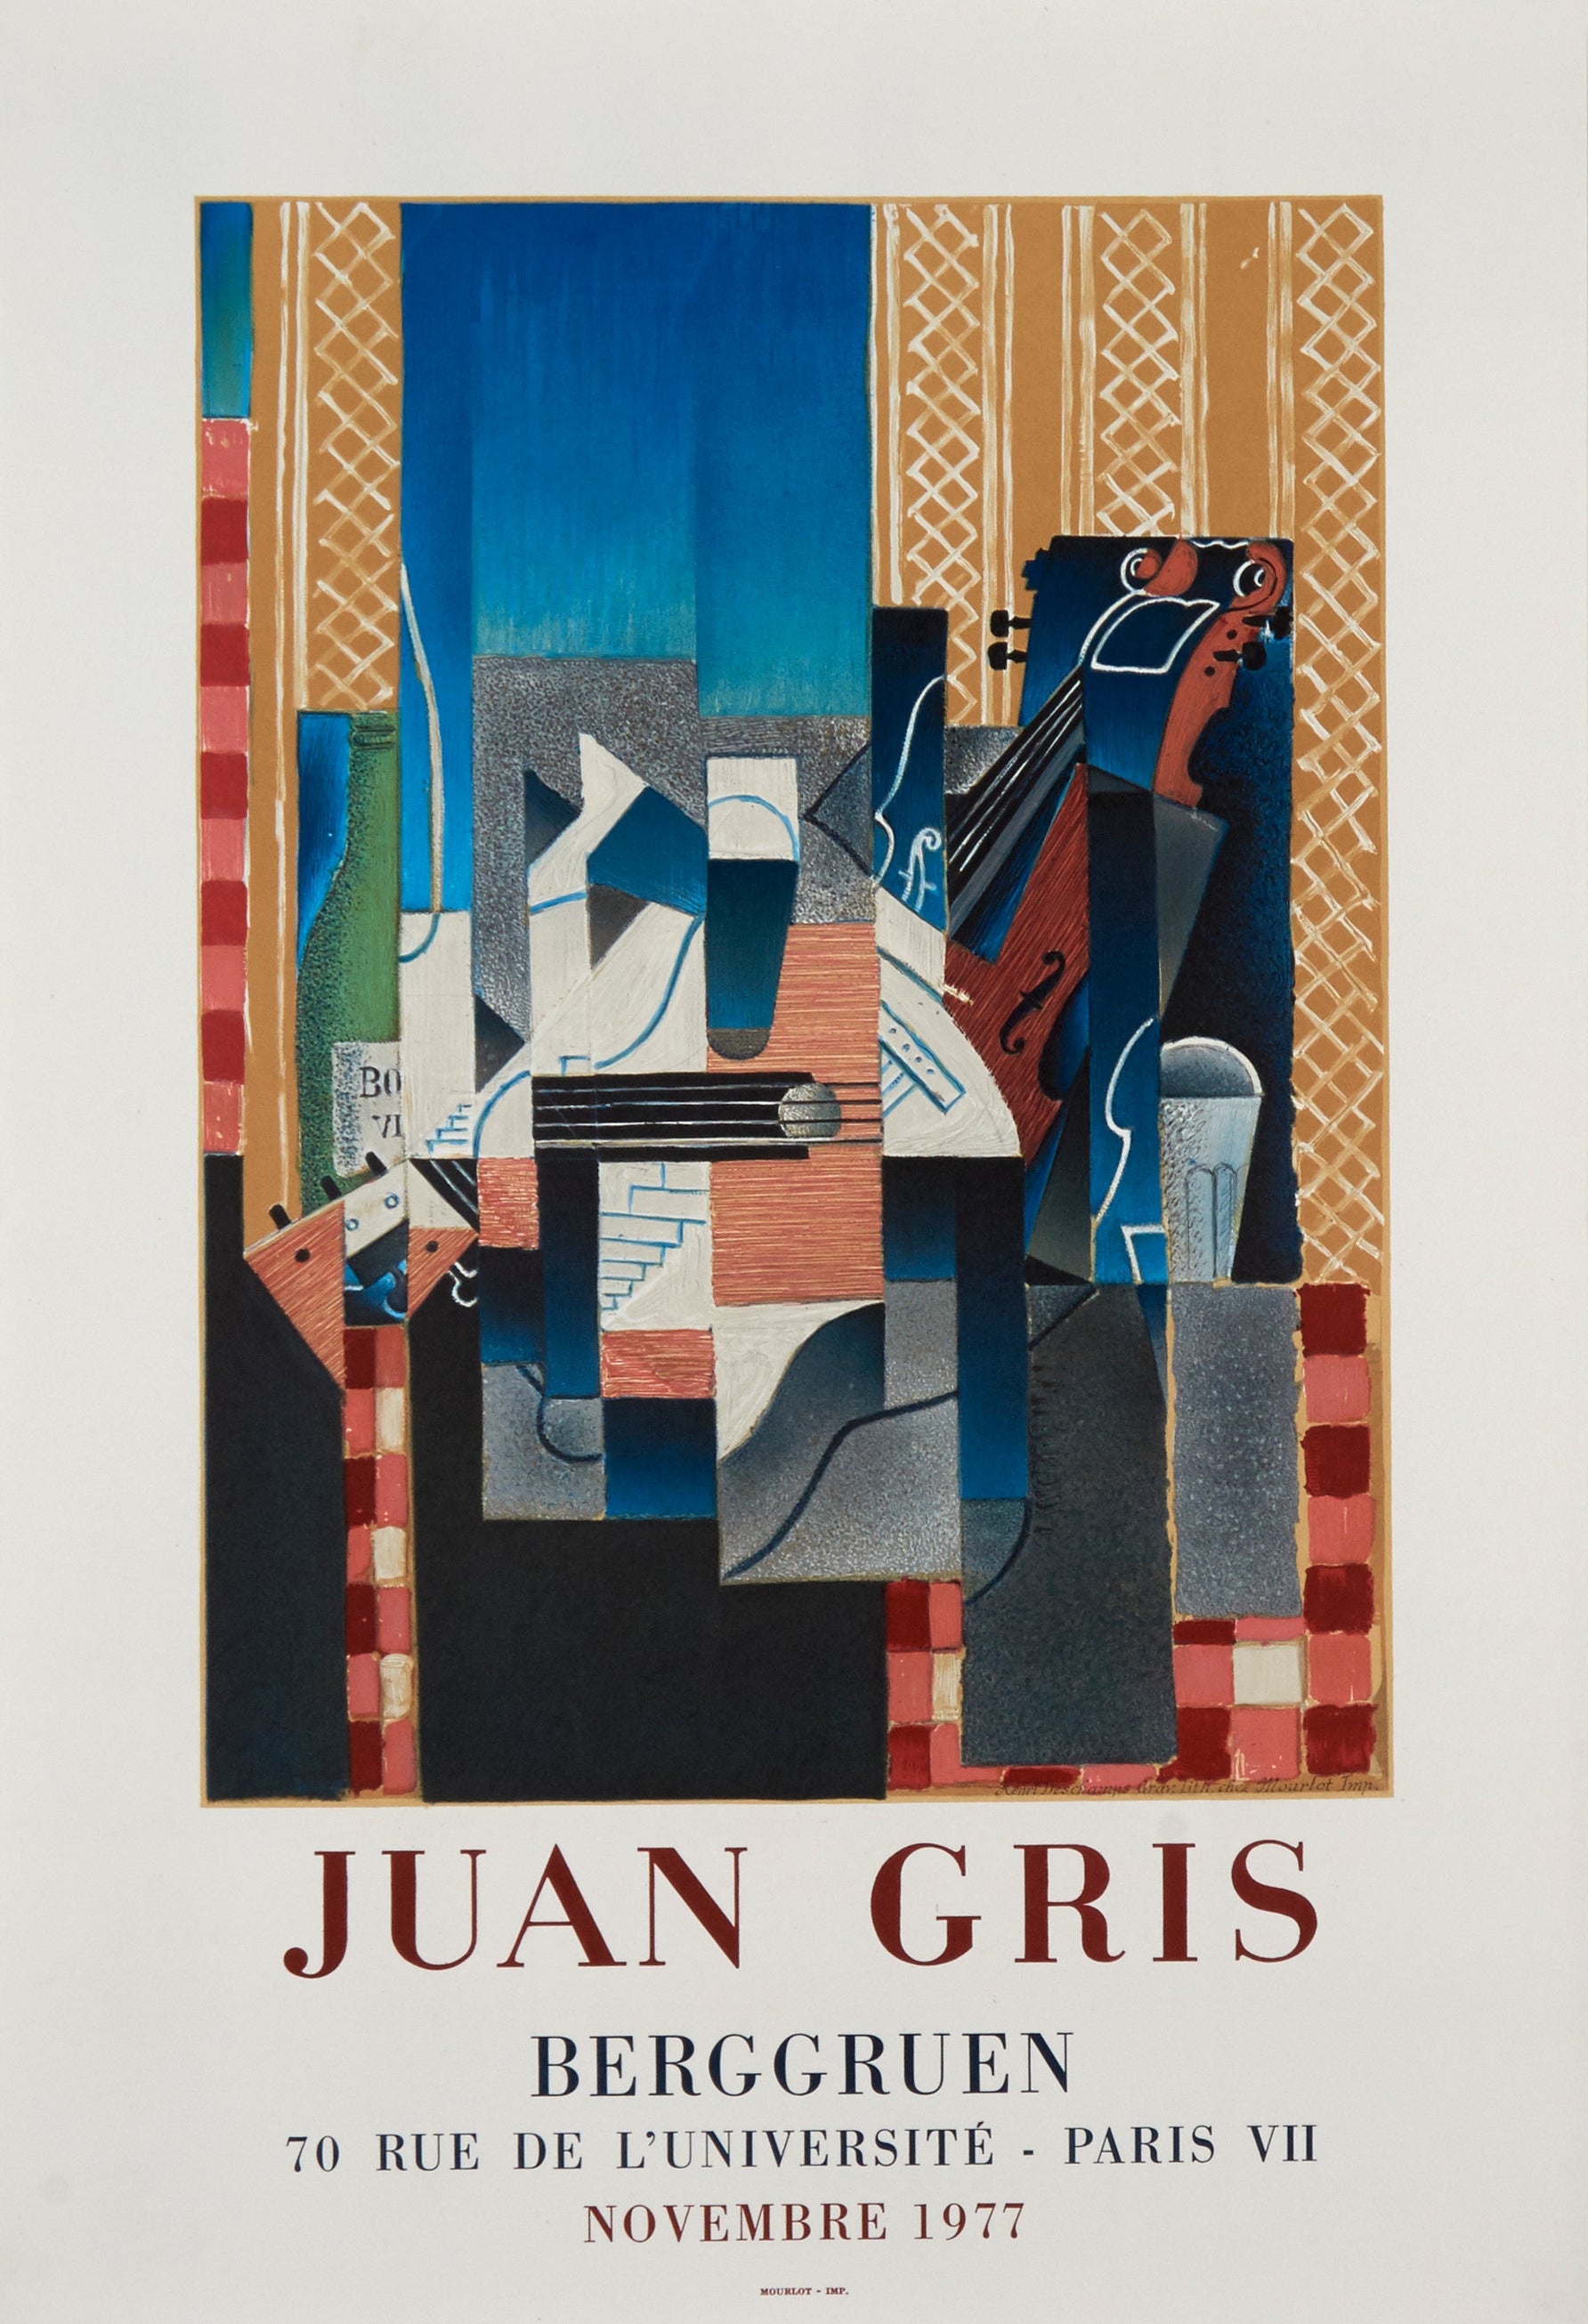 Violin and Guitar - Galerie Berggruen (after) Juan Gris, 1977 - Mourlot Editions - Fine_Art - Poster - Lithograph - Wall Art - Vintage - Prints - Original